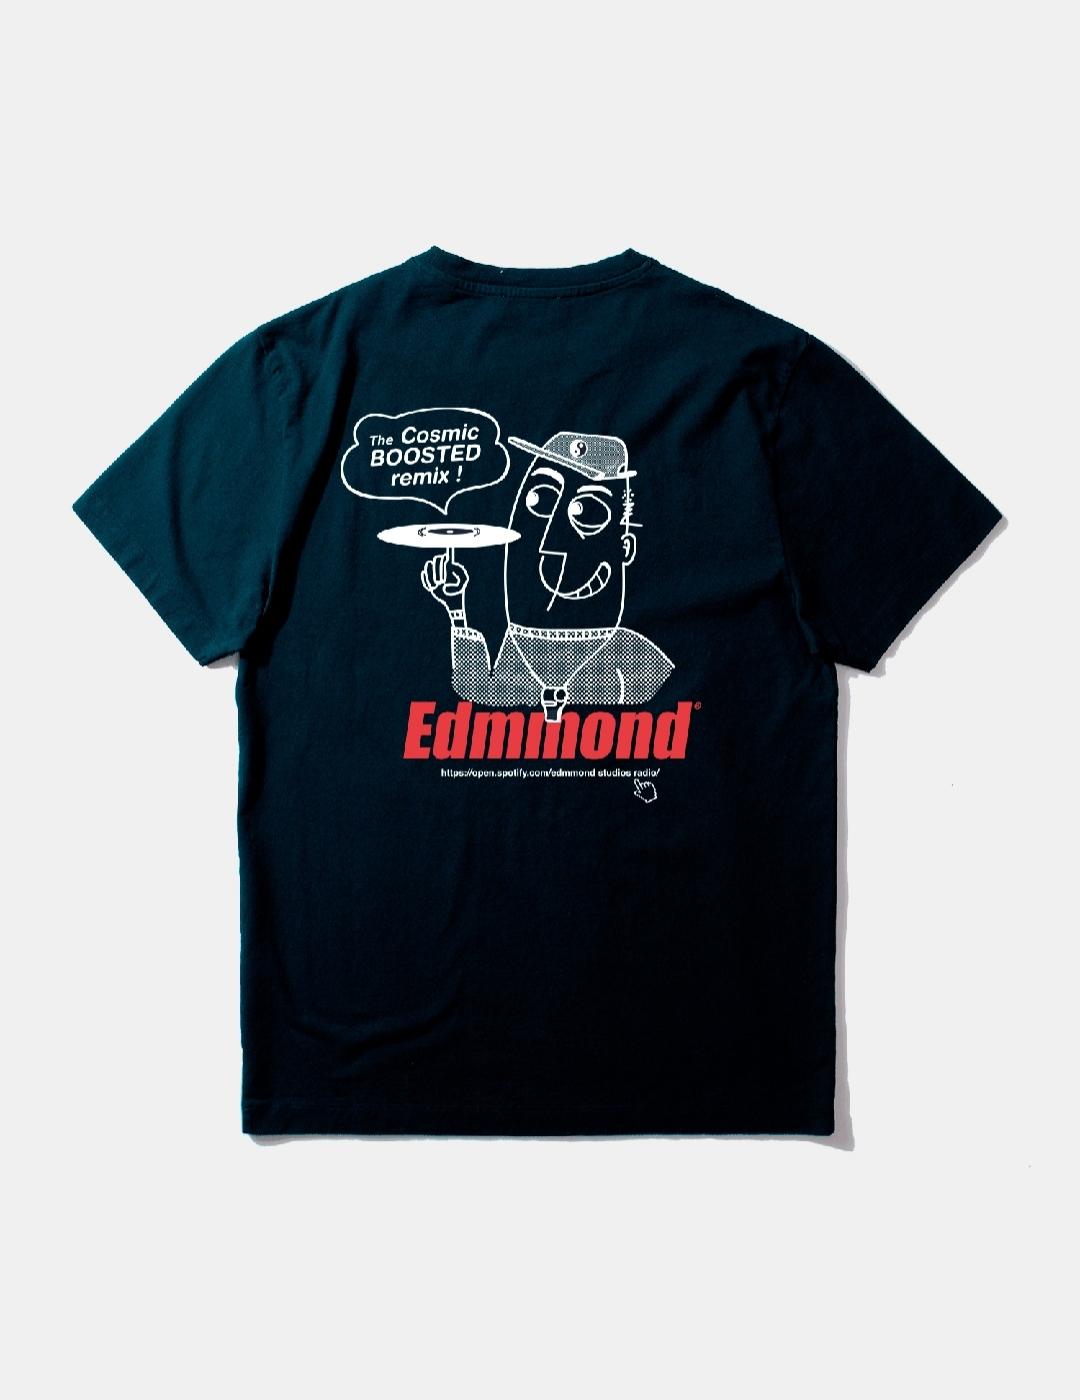 Camiseta Edmmond Boosted Plain navy